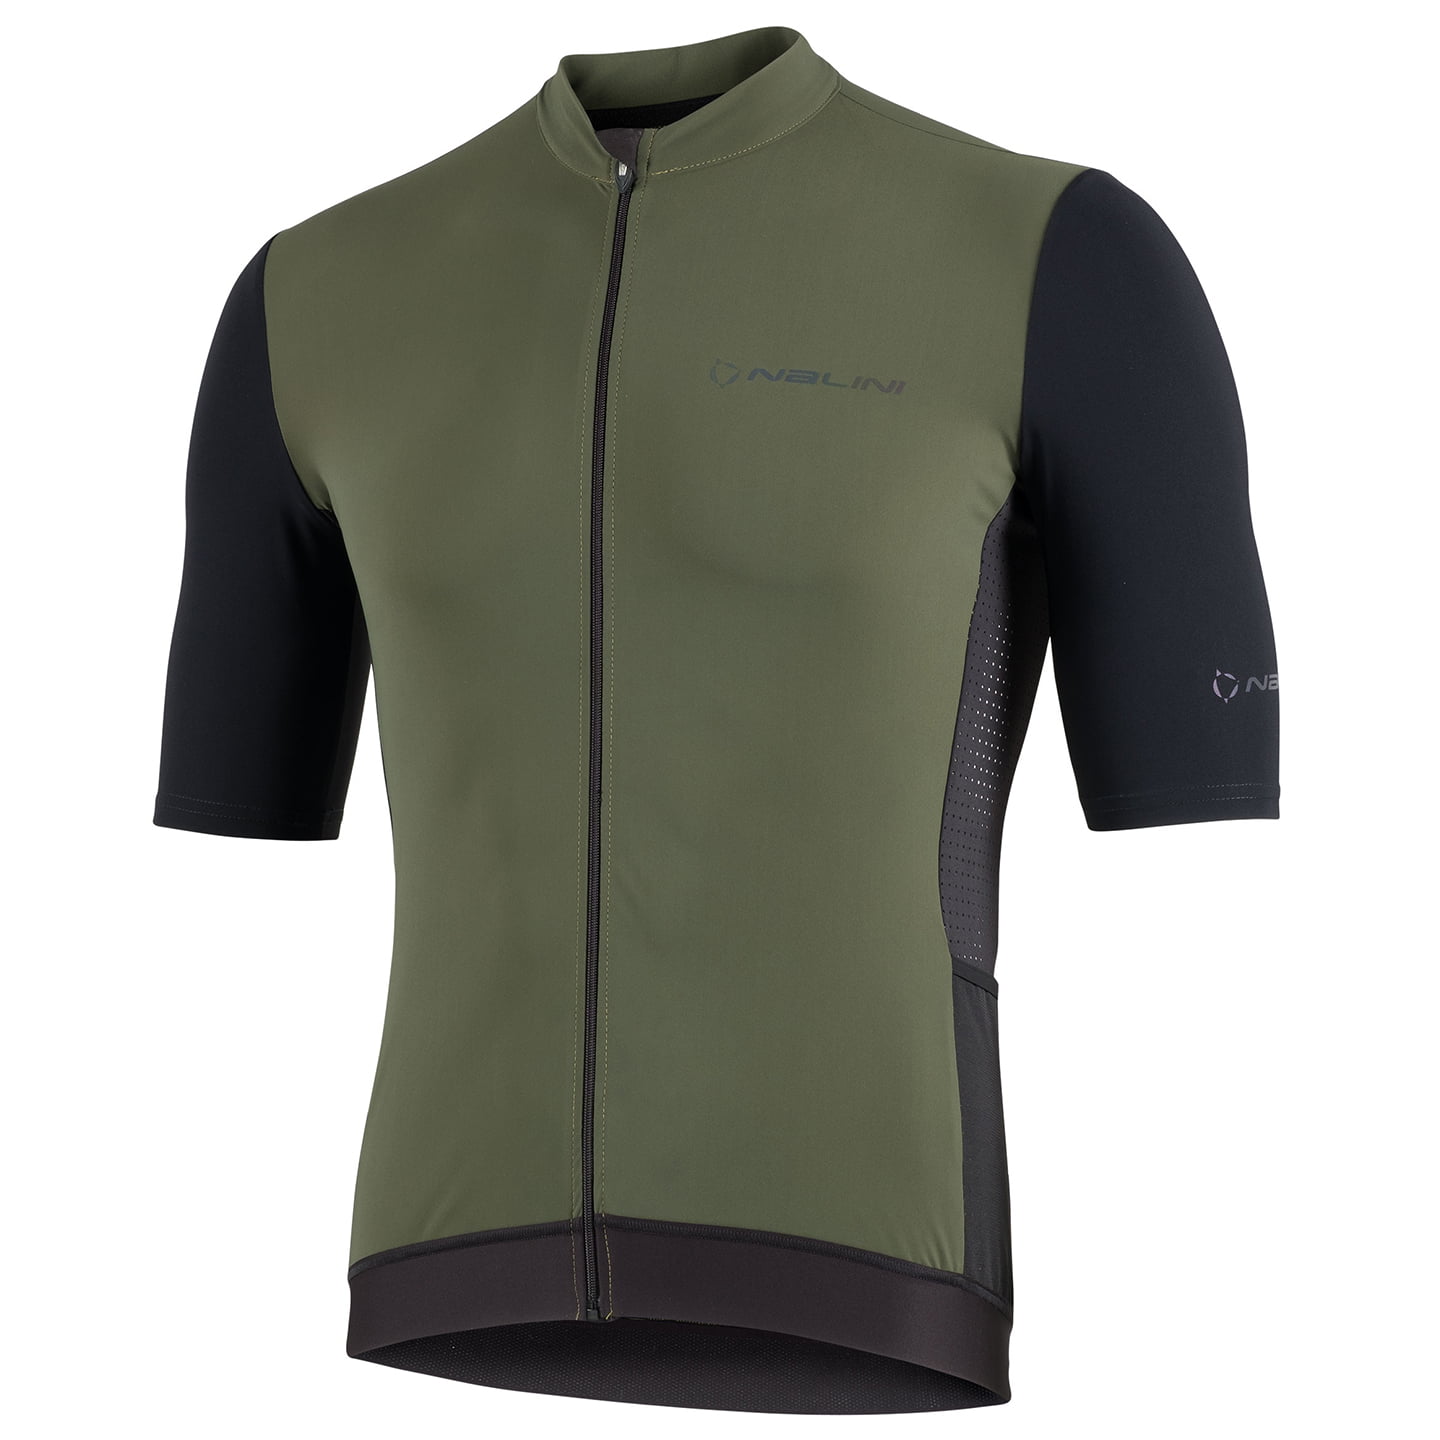 NALINI New Sun Block Short Sleeve Jersey Short Sleeve Jersey, for men, size M, Cycling jersey, Cycling clothing